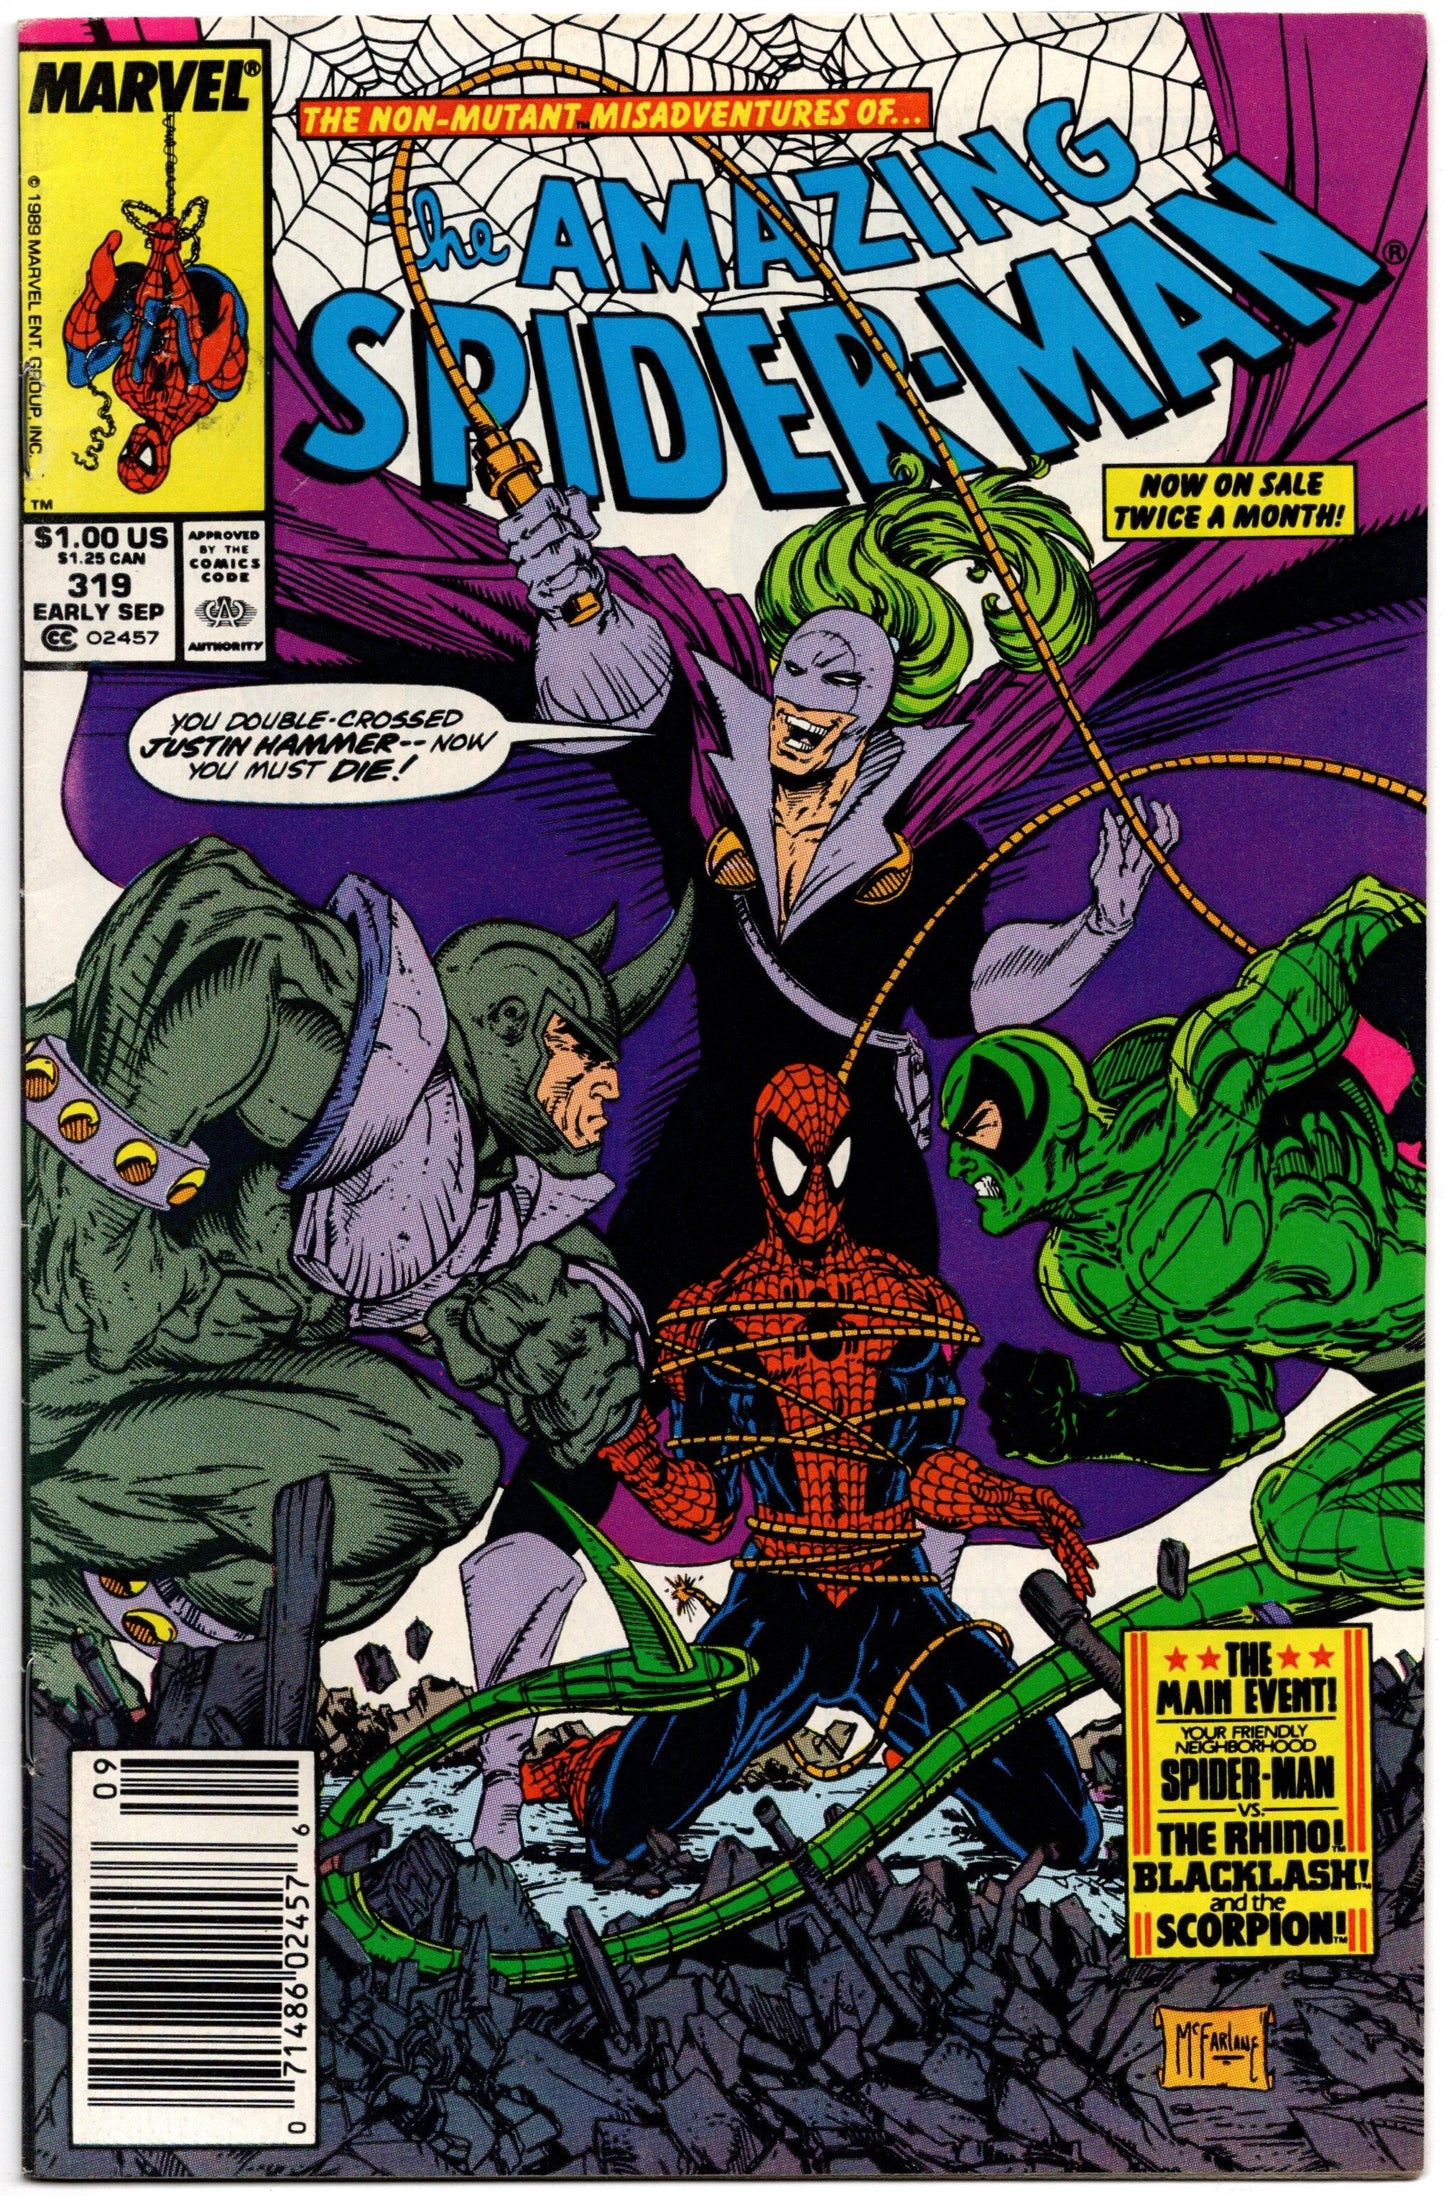 Incroyable Spider-Man (1963) #319 - Kiosque à journaux